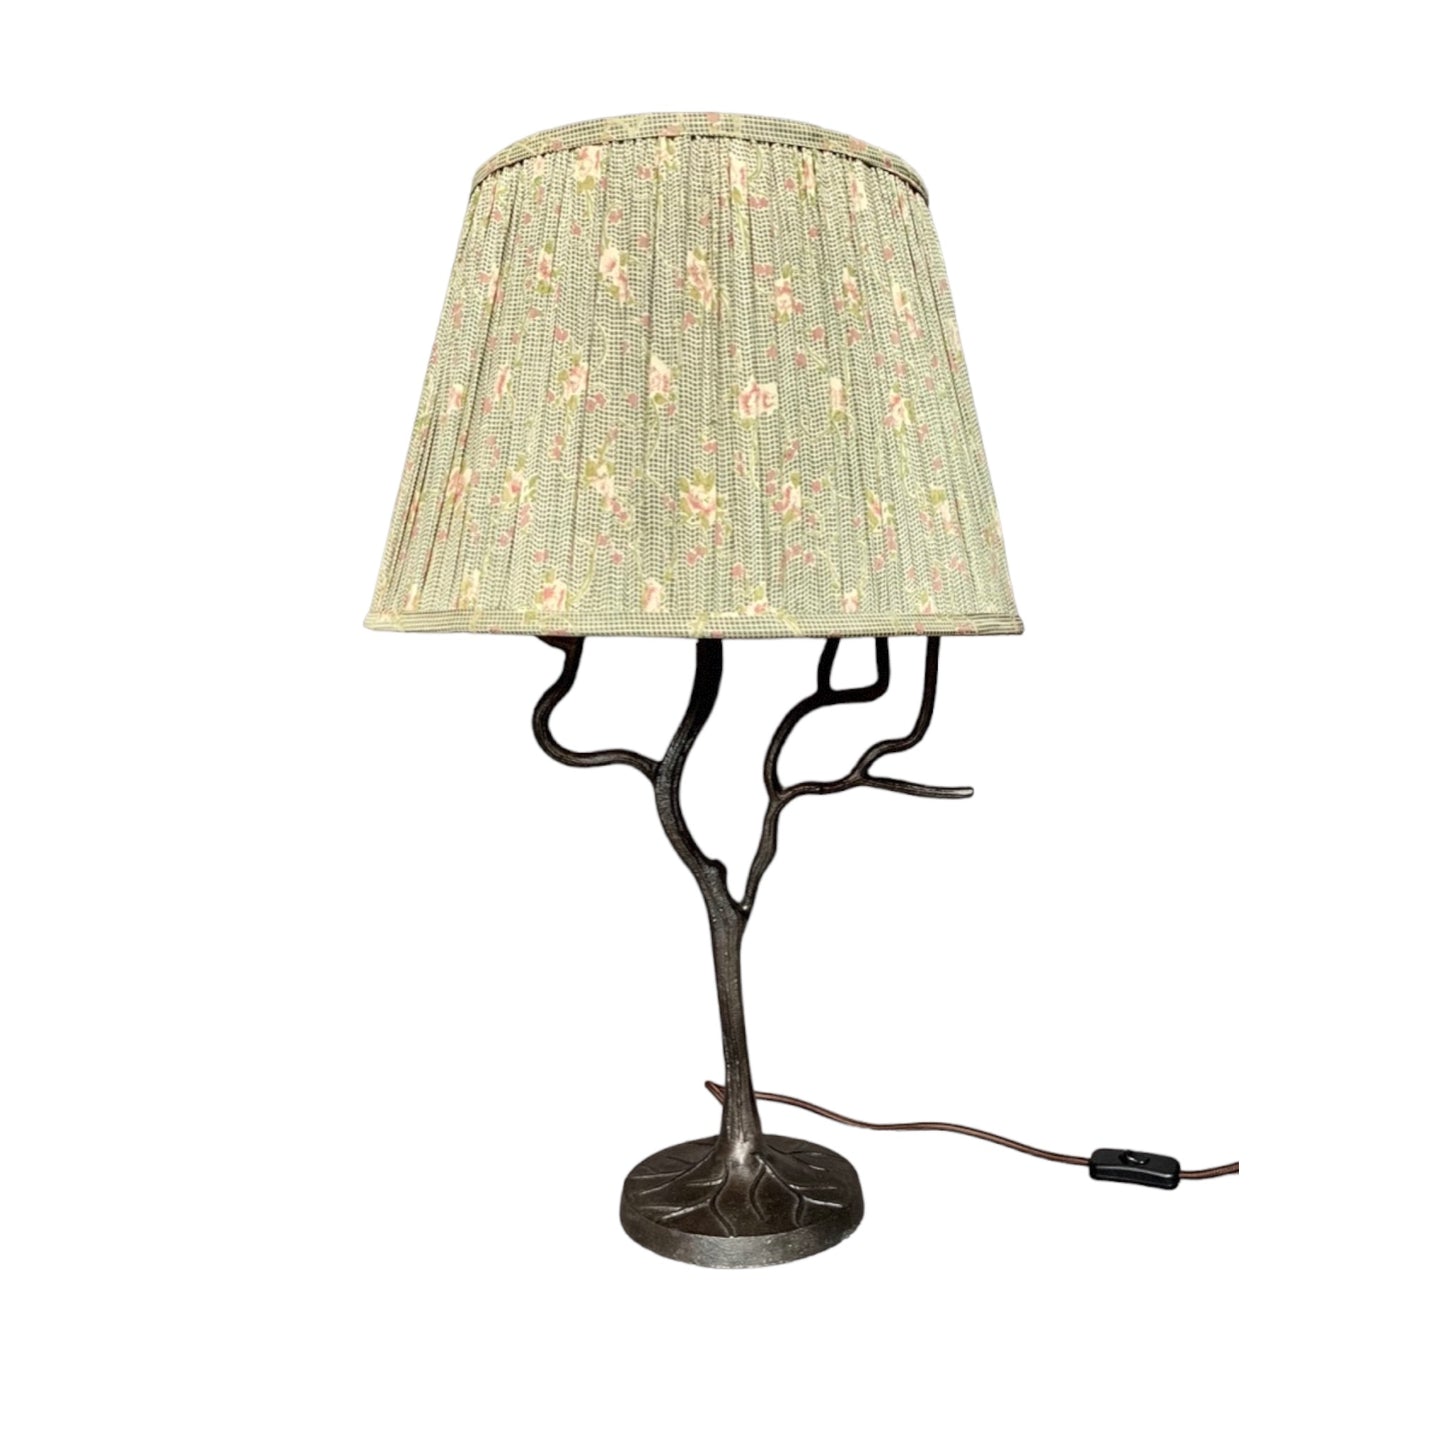 Adita tree lamp with green trellis lampshade